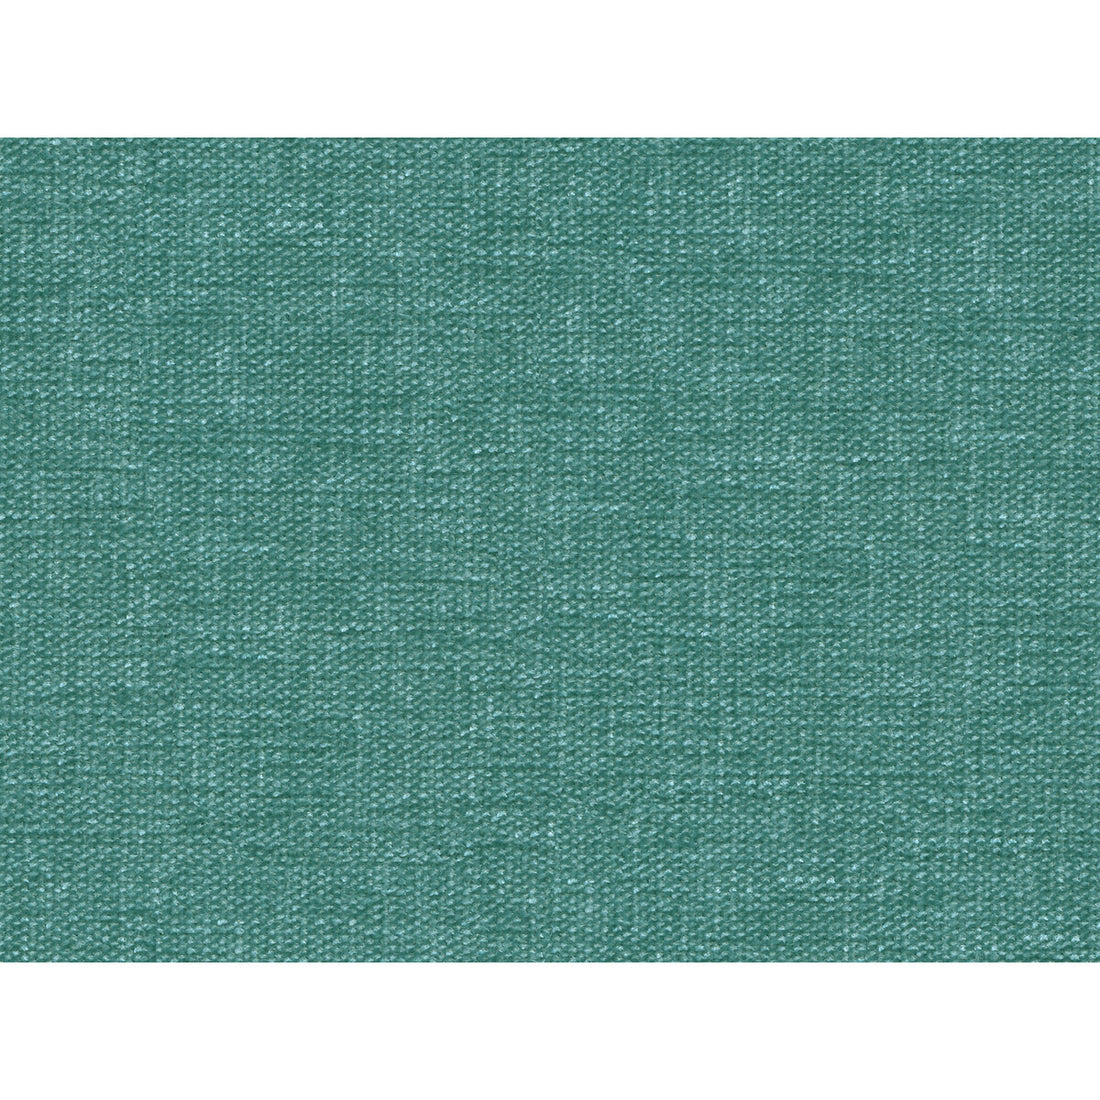 Kravet Smart fabric in 34959-313 color - pattern 34959.313.0 - by Kravet Smart in the Performance Kravetarmor collection